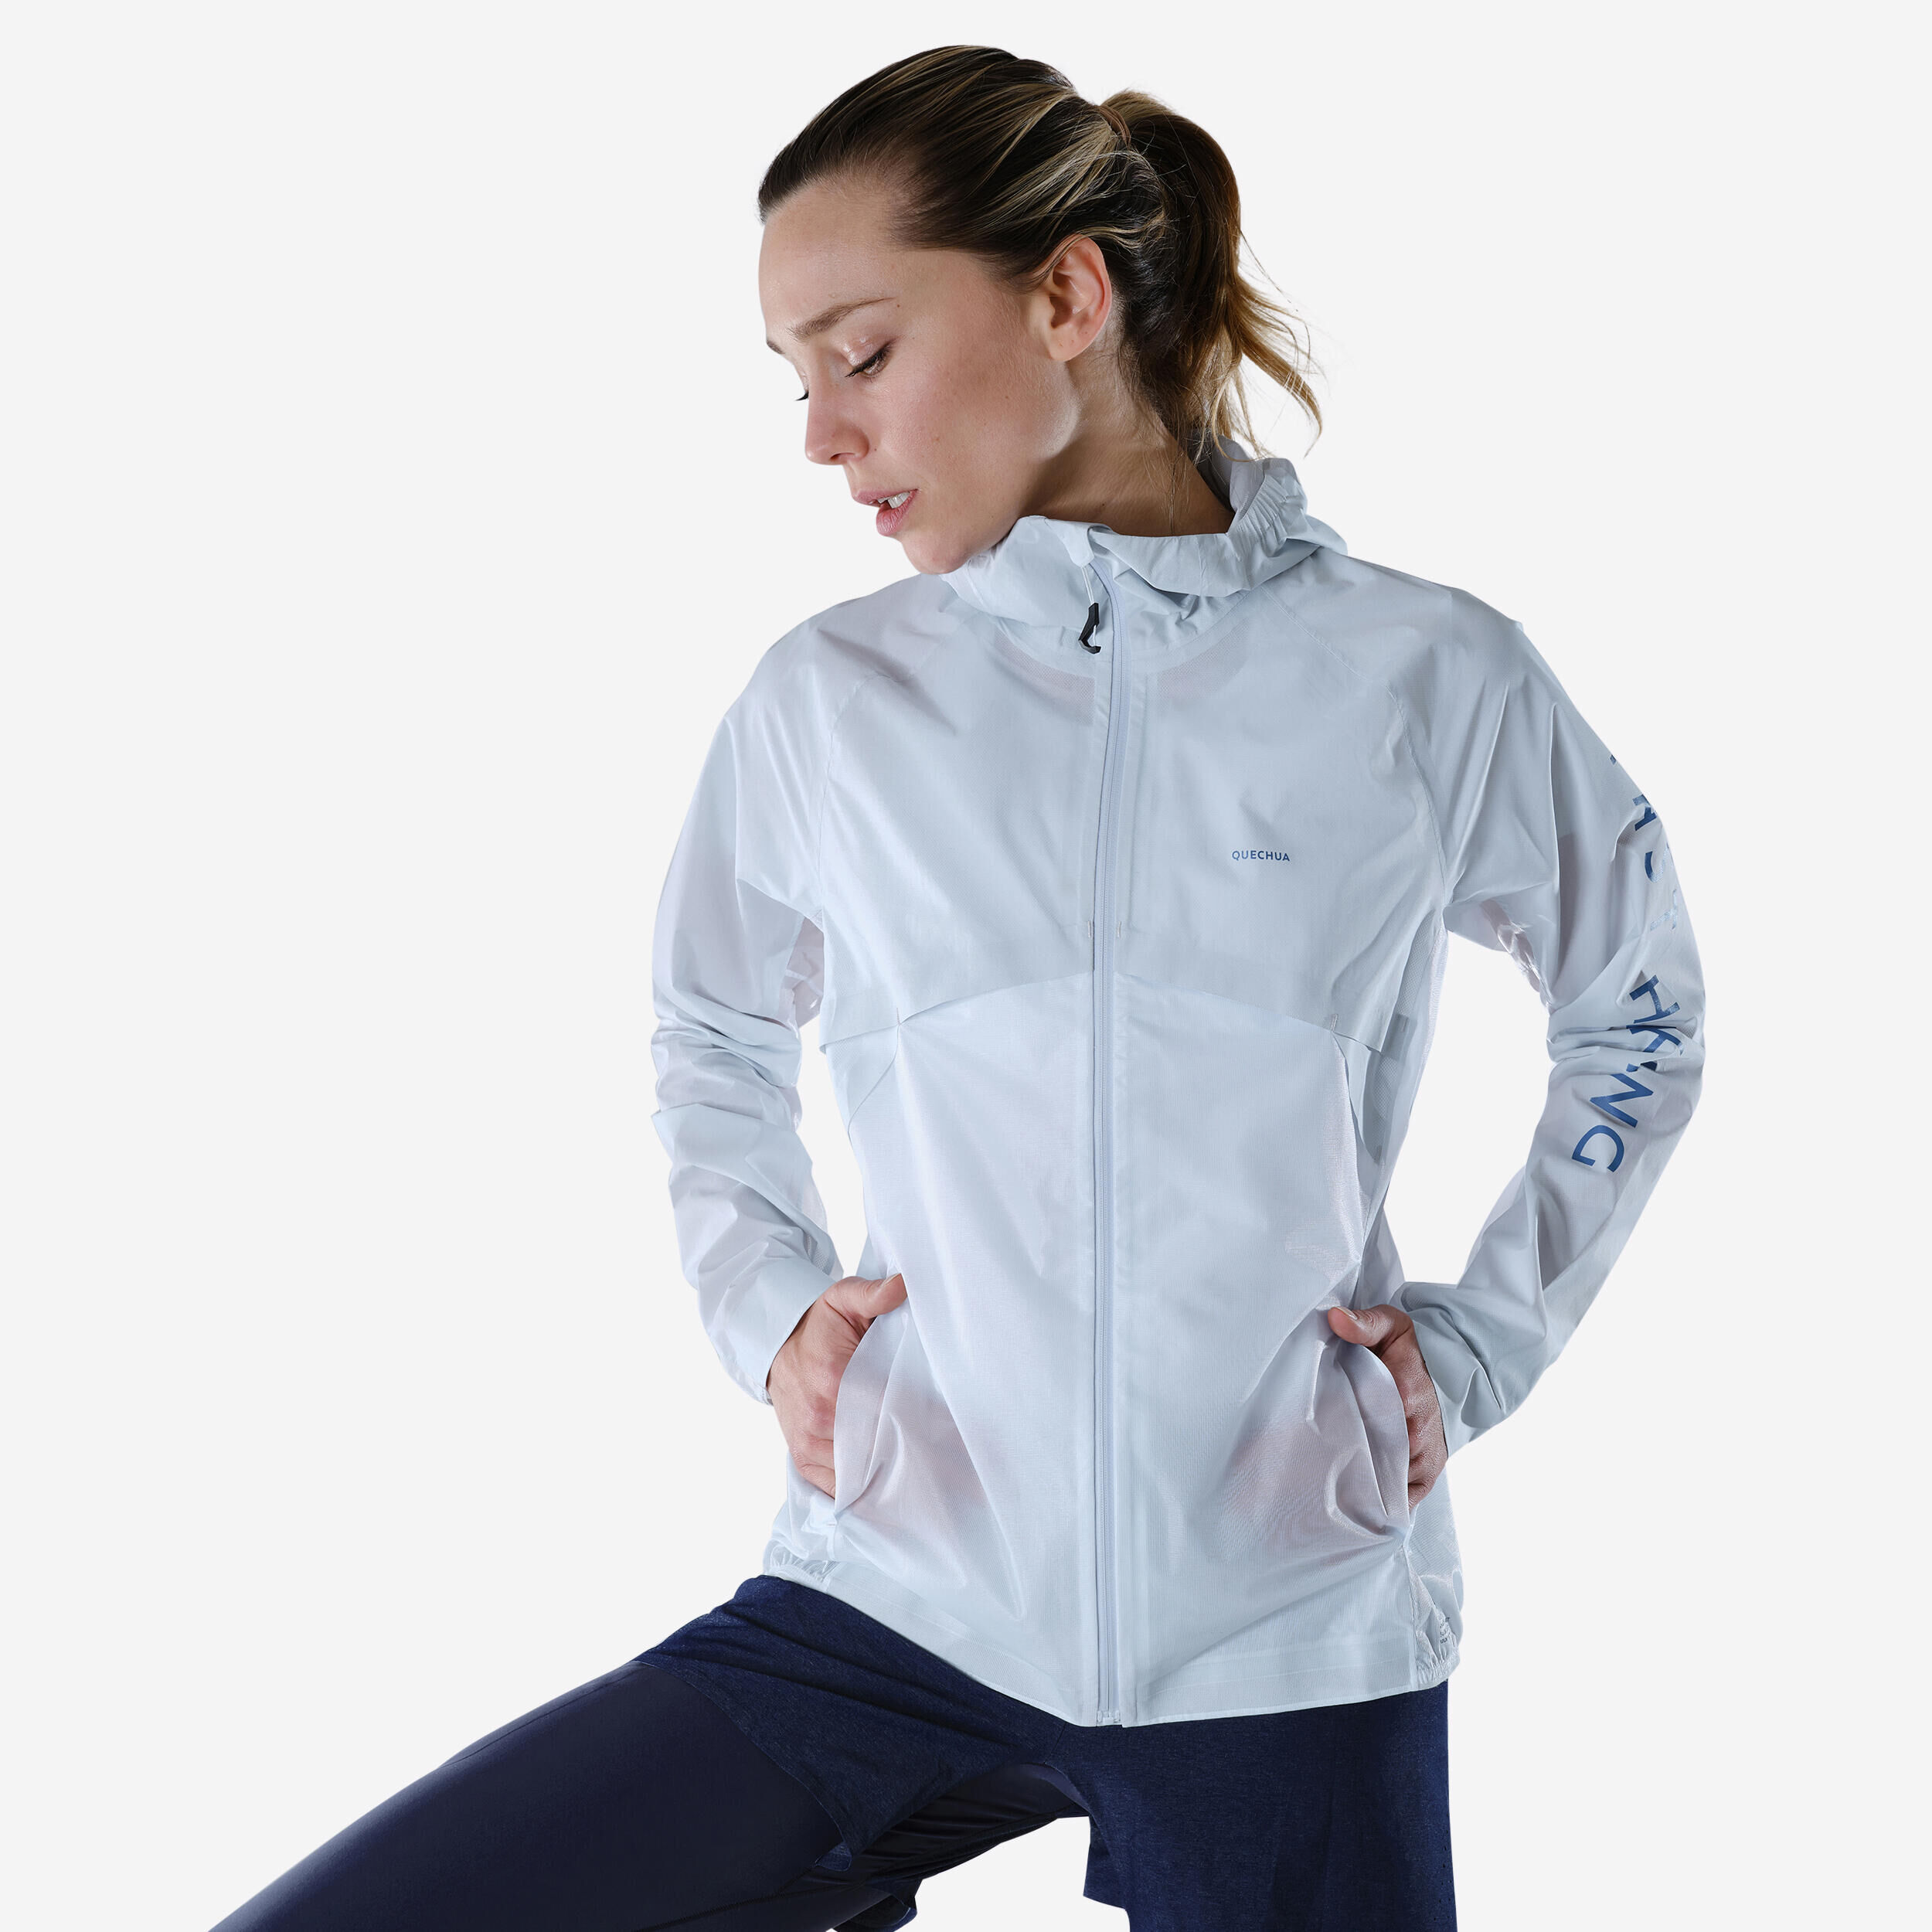 QUECHUA Women’s ultra-light hybrid fast hiking jacket FH900 grey.